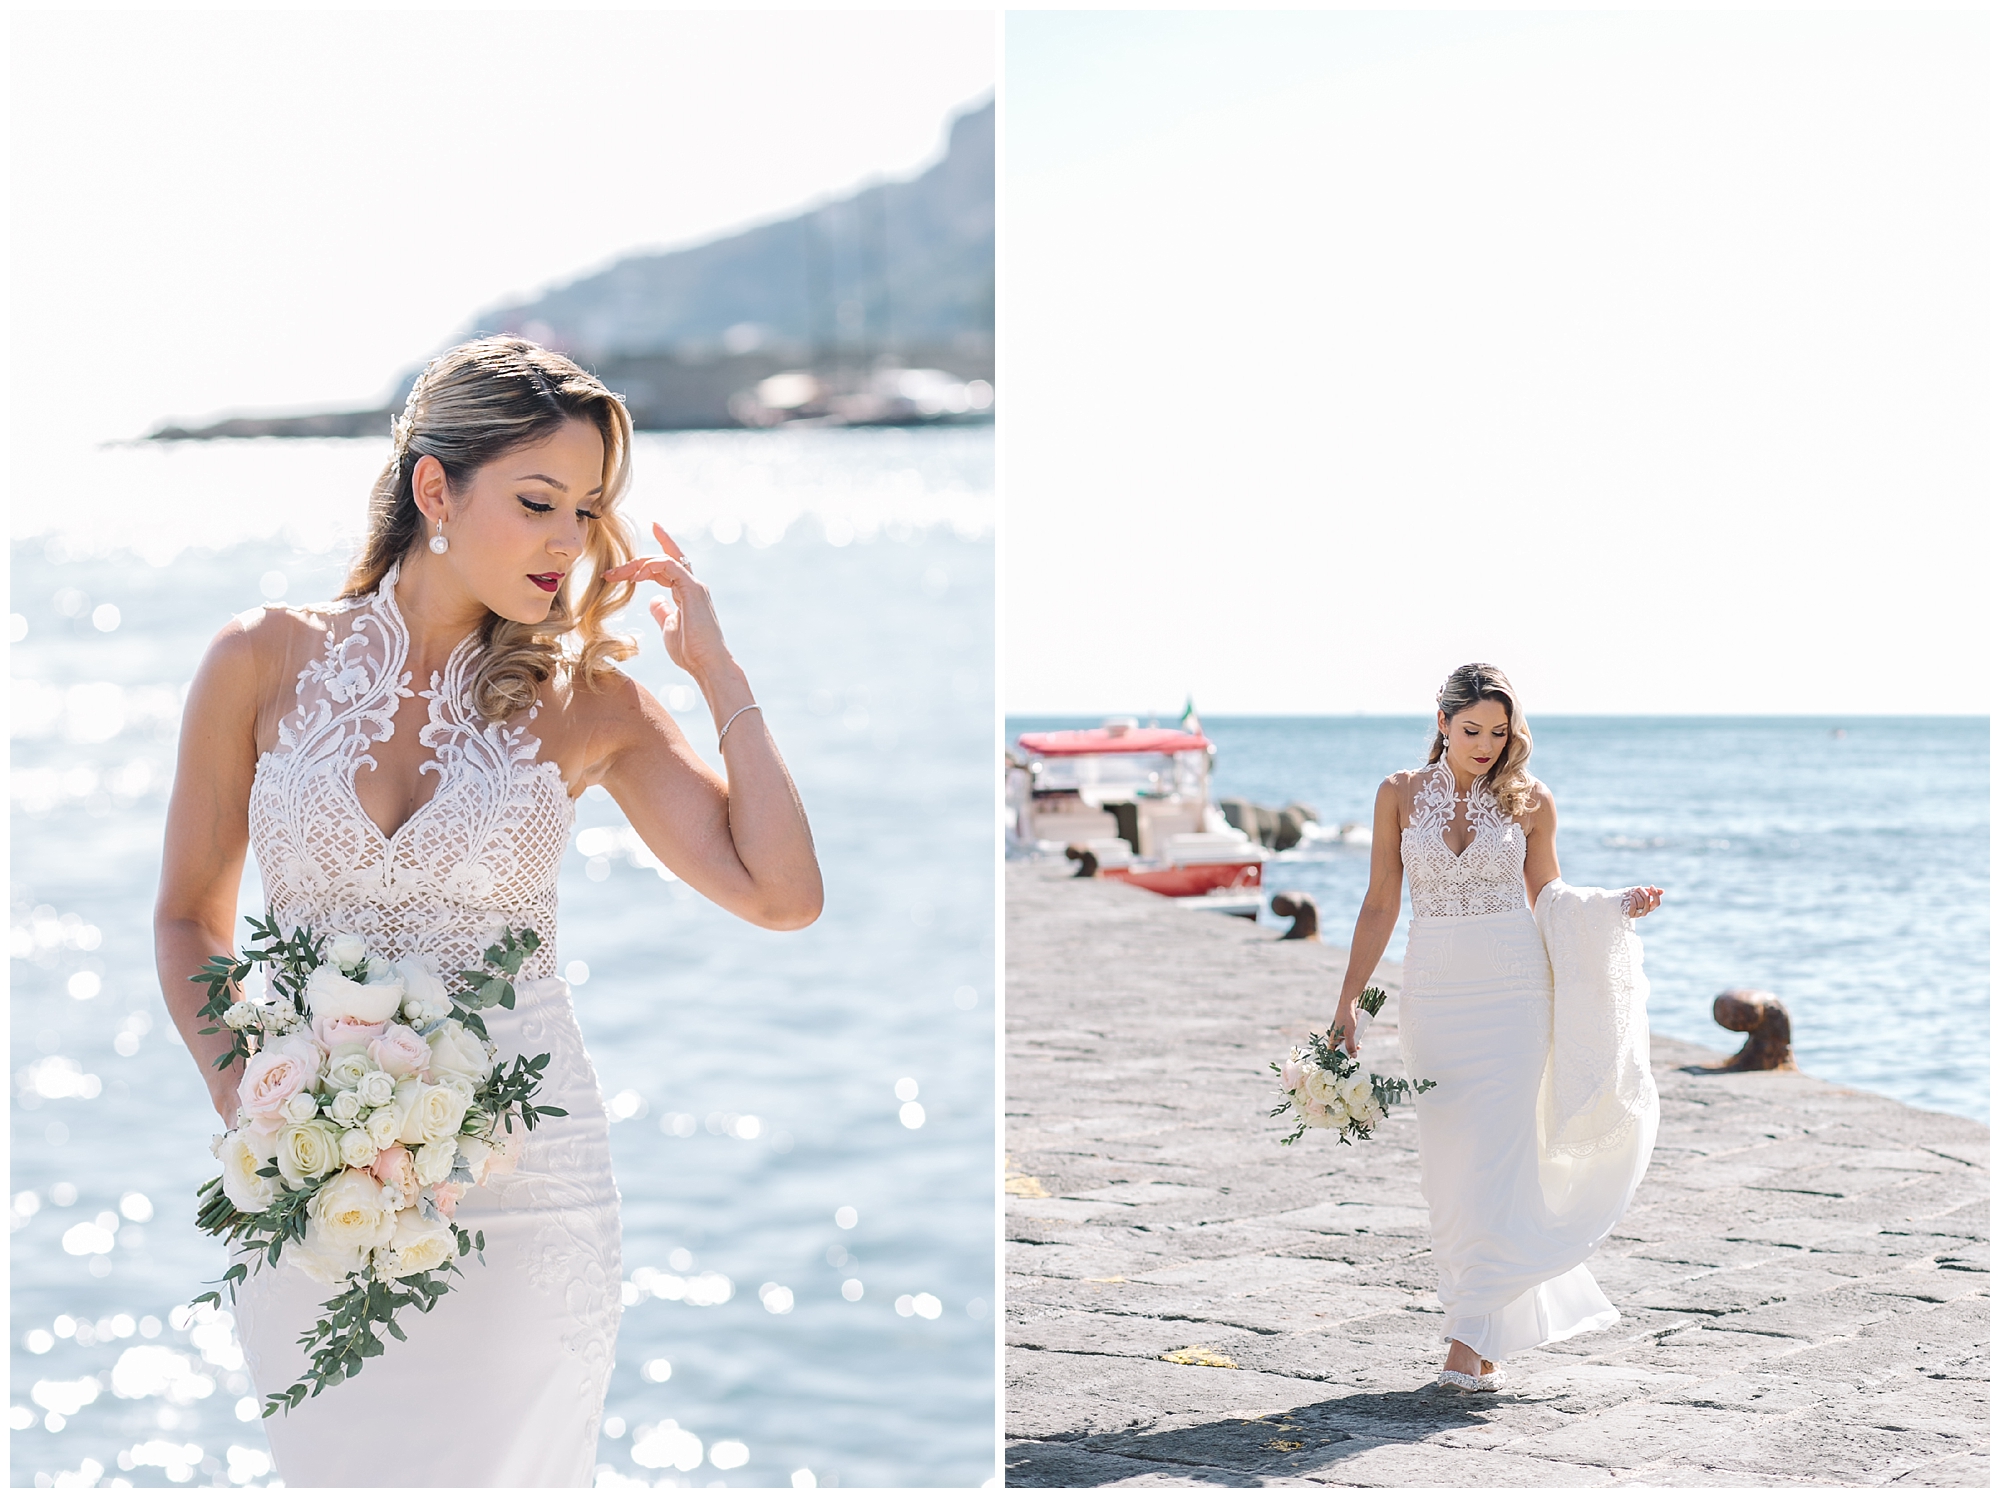 NormanPhotoPaper_Amalfi_Coast_Italy_Destination_Wedding_Photographer_Krysta_Norman_0036.jpg